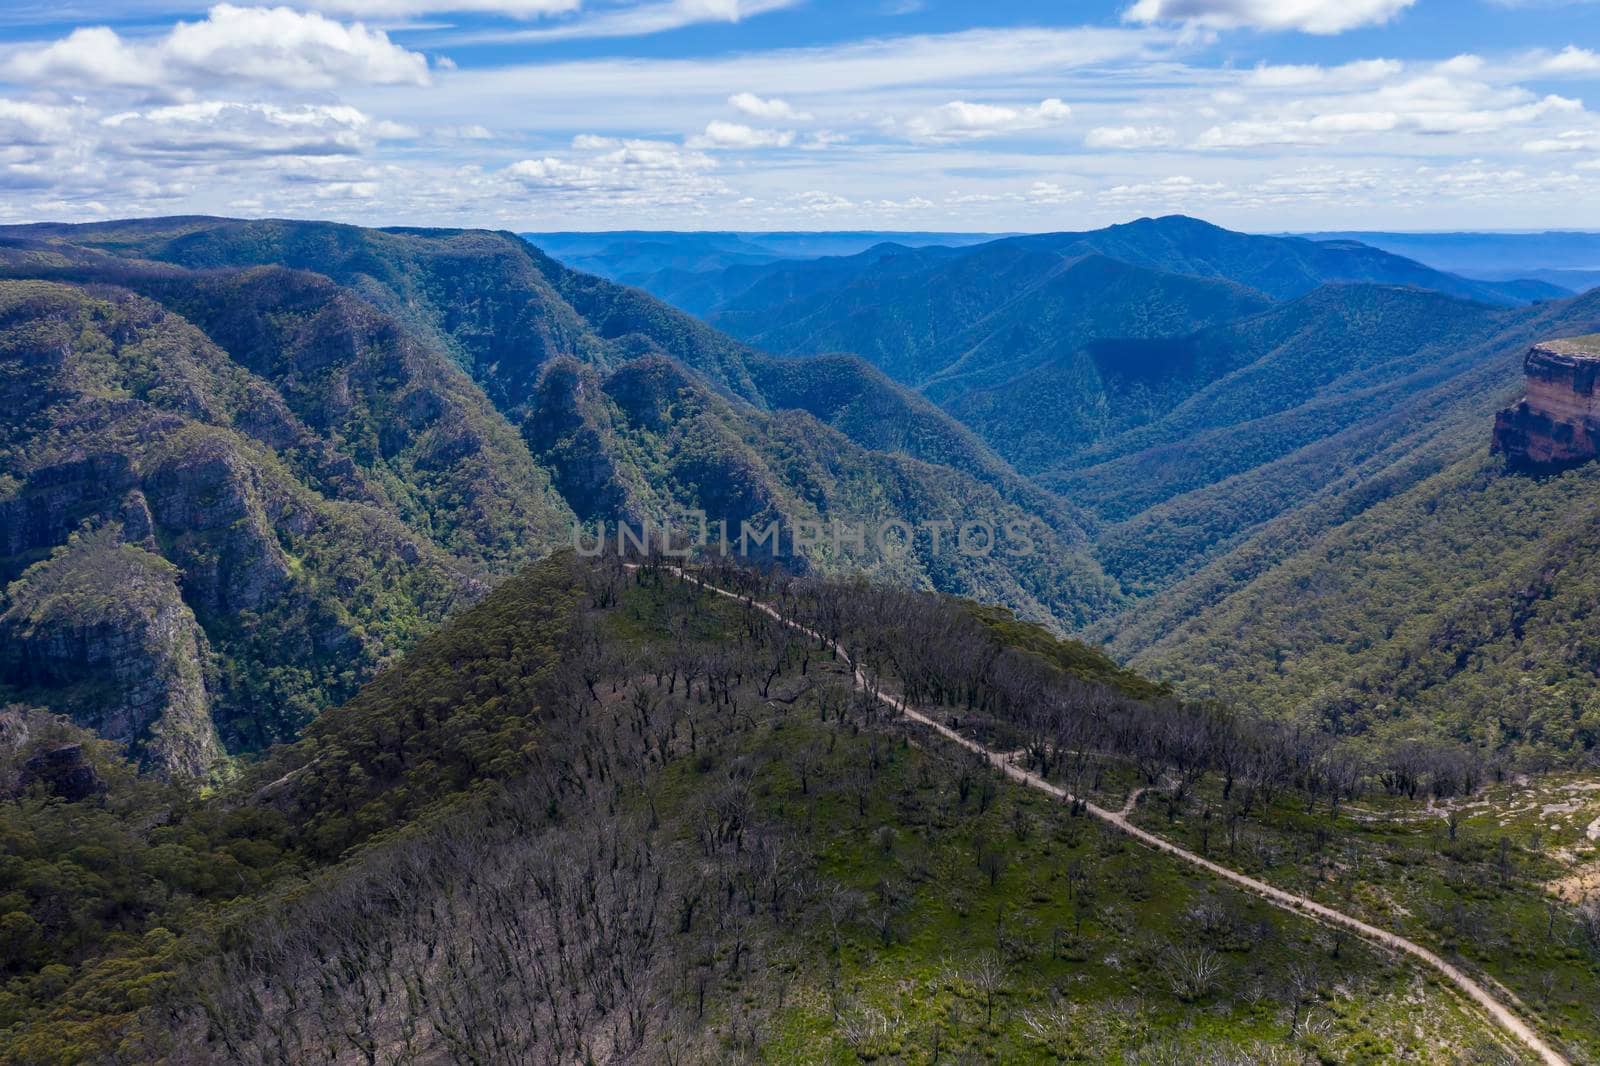 Aerial view of Kanangra-Boyd National Park in regional Australia by WittkePhotos